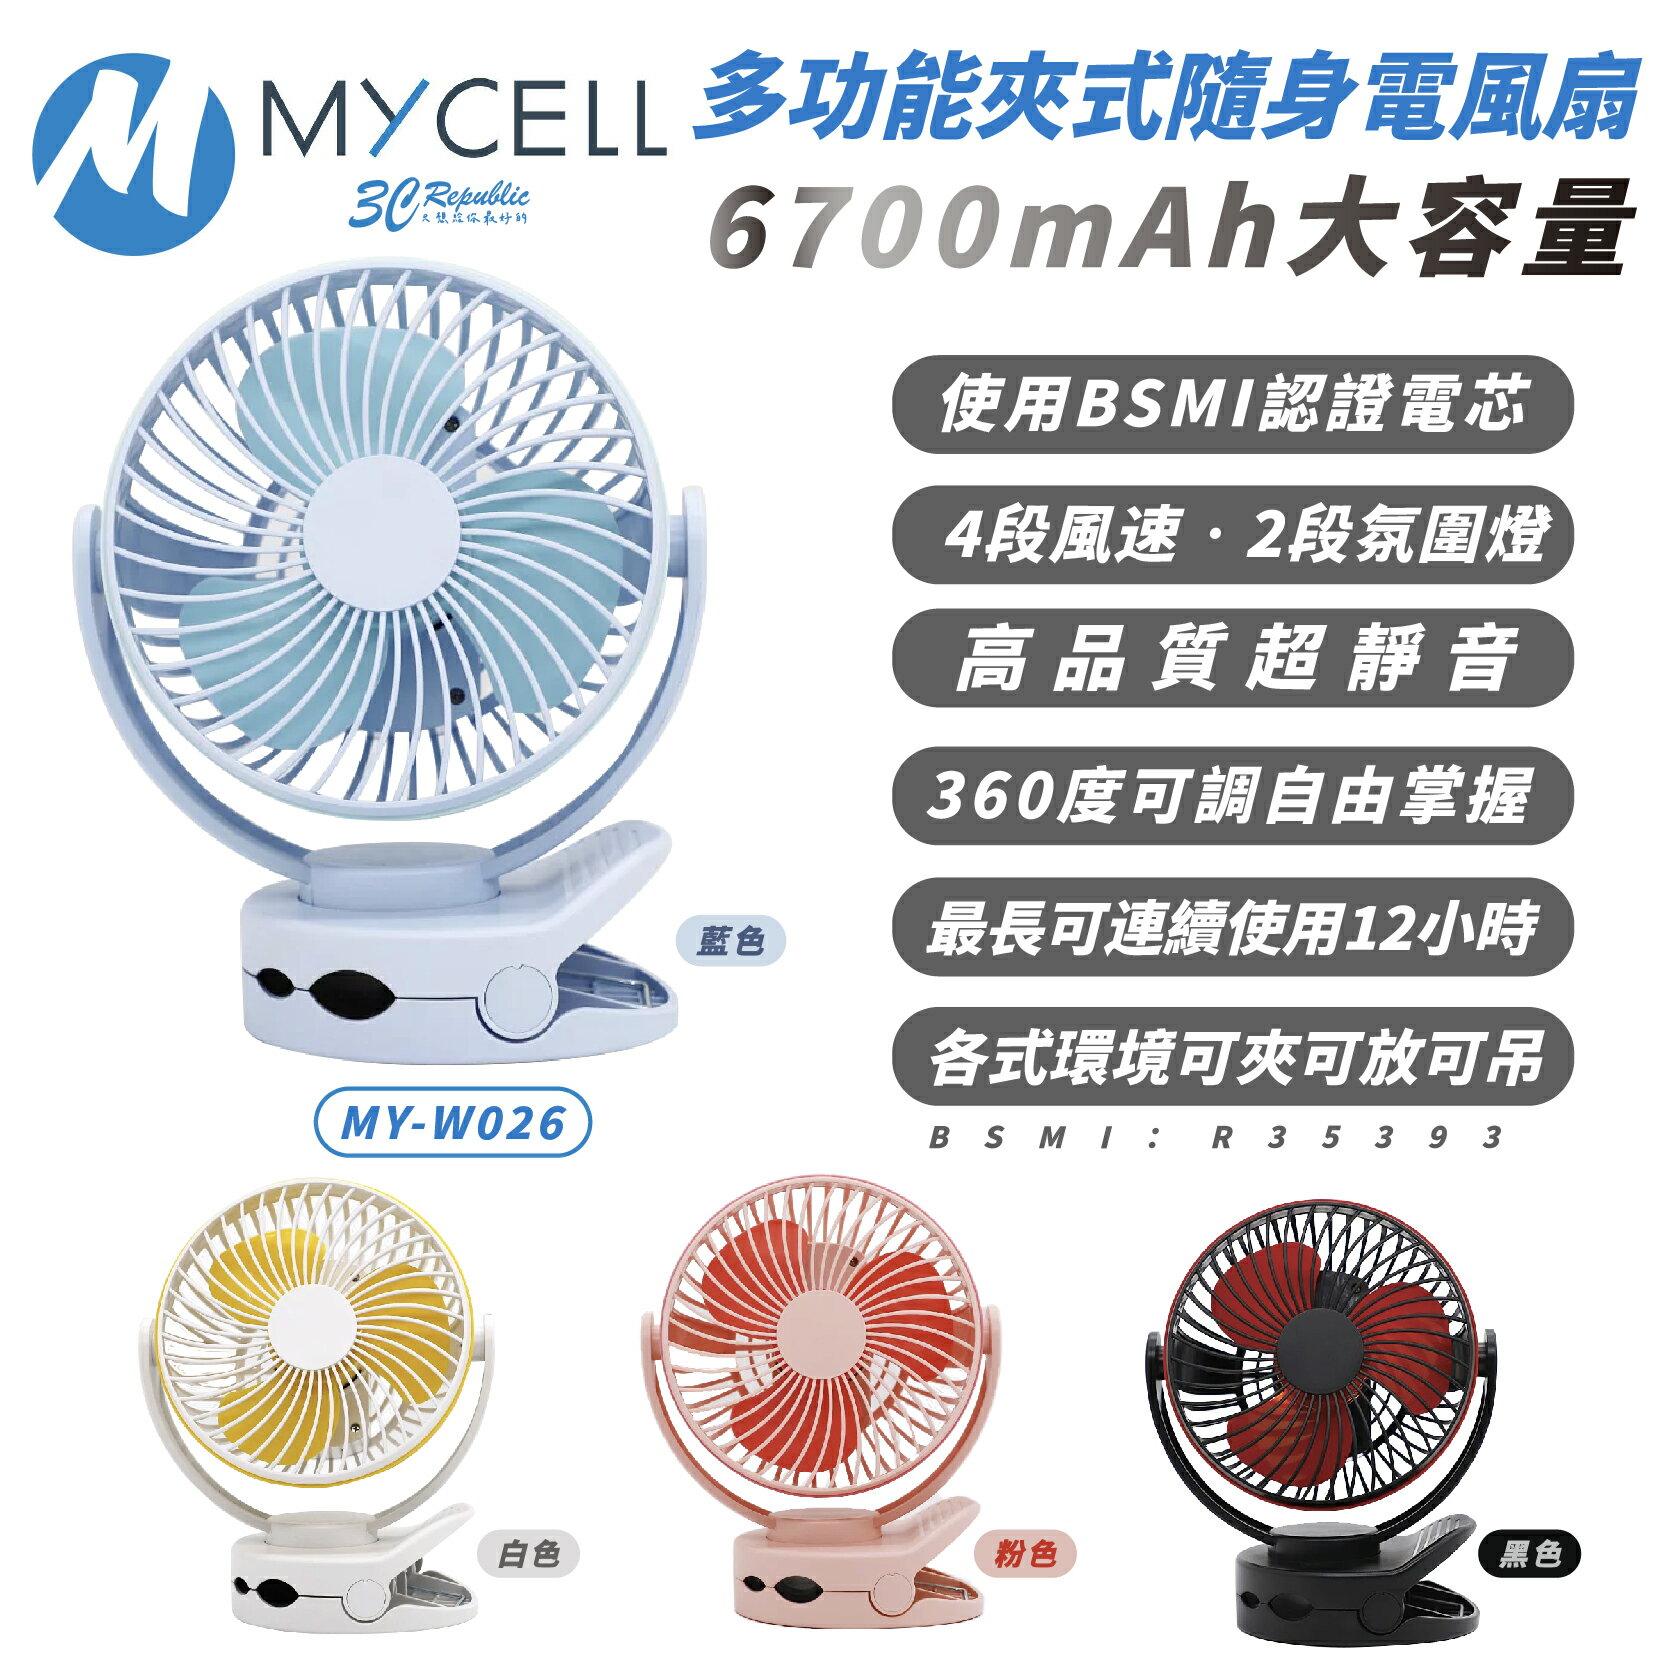 MYCELL 6700mAh 多功能 夾式 隨身 電風扇 風扇 循環扇 露營風扇